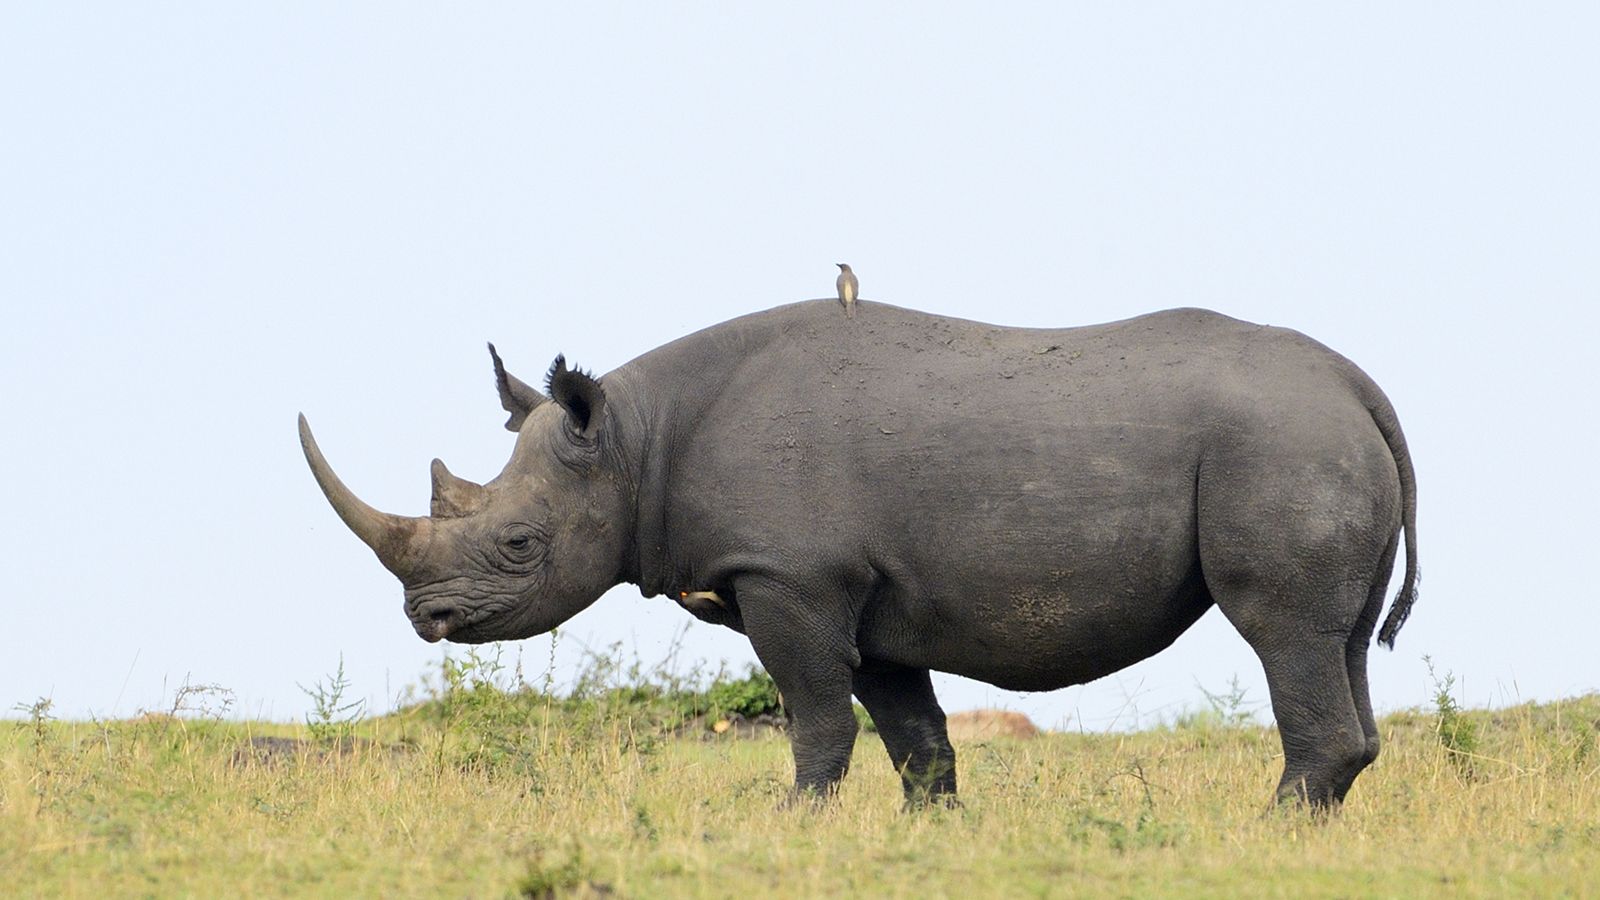 Rhino wallpaper, Animal, HQ Rhino pictureK Wallpaper 2019